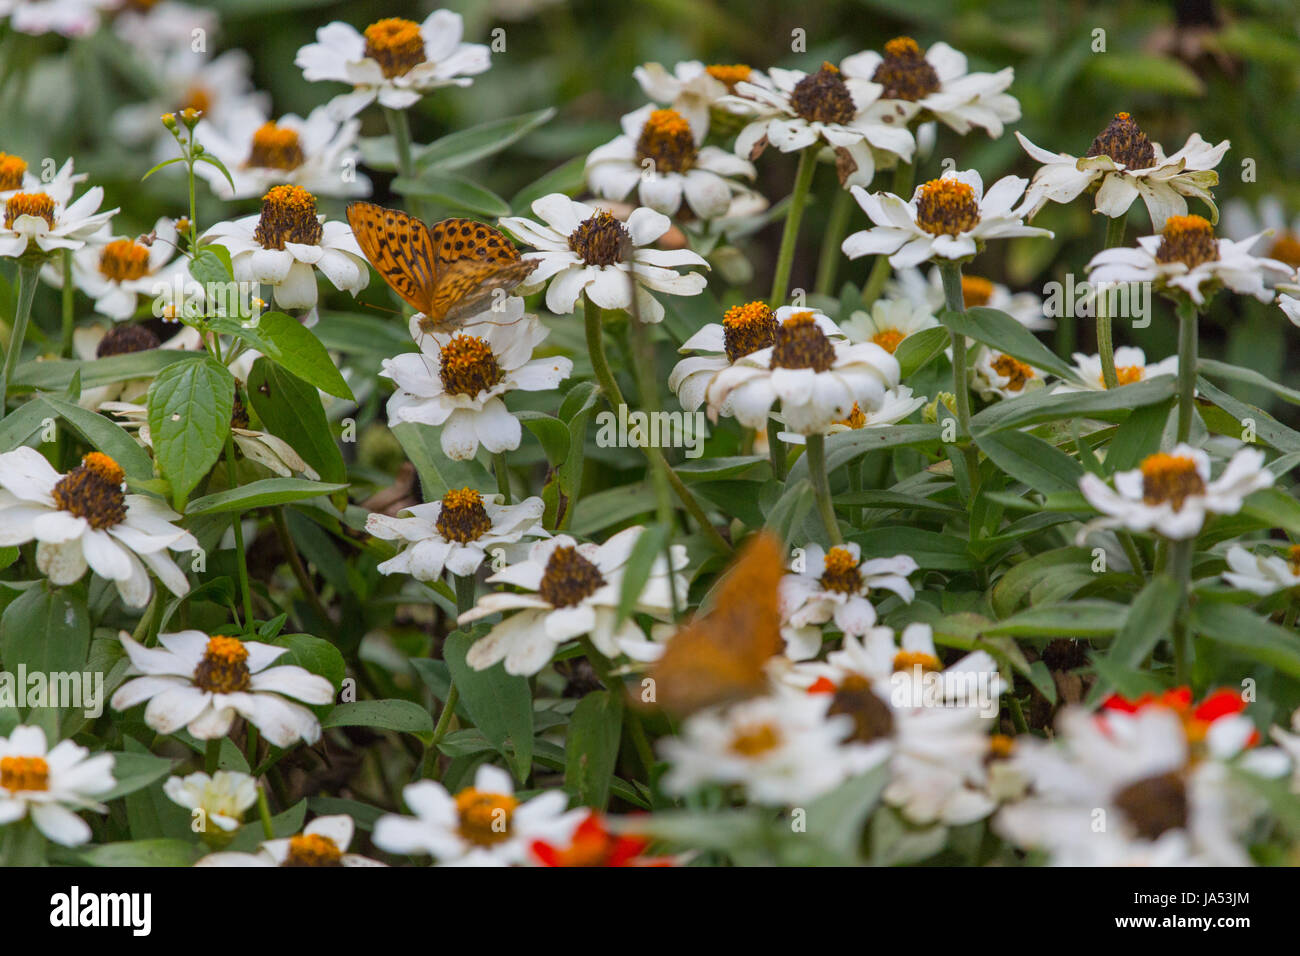 insect, butterfly, moth, insect, butterfly, moth, neoptera, lepidoptera, Stock Photo